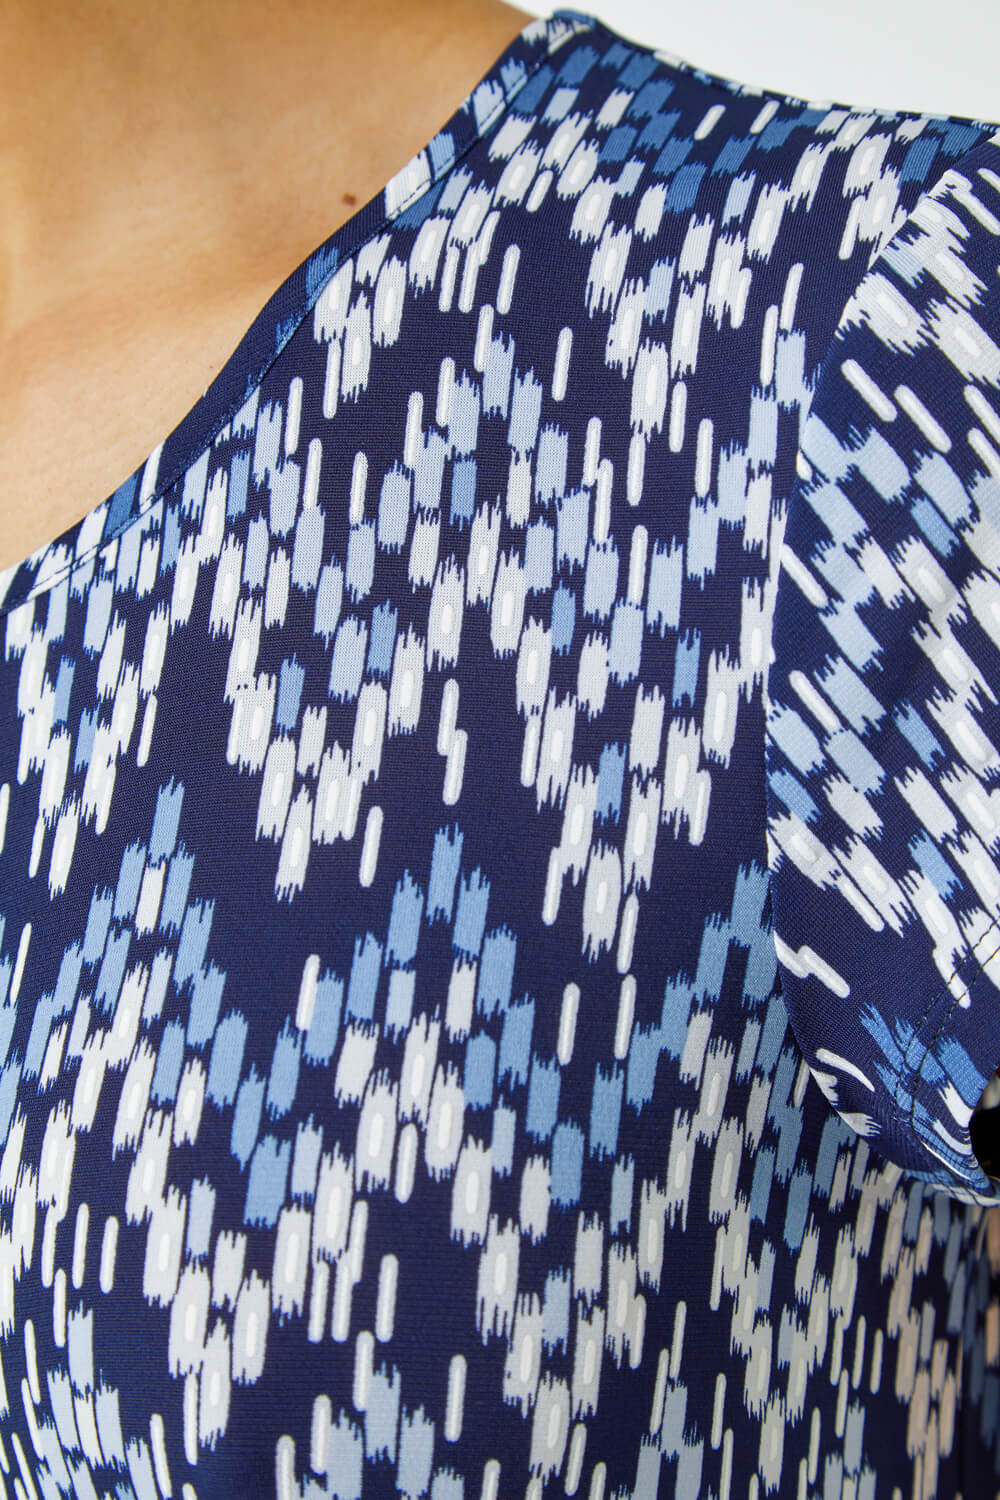 Blue Aztec Print Textured Stretch Dress, Image 5 of 5